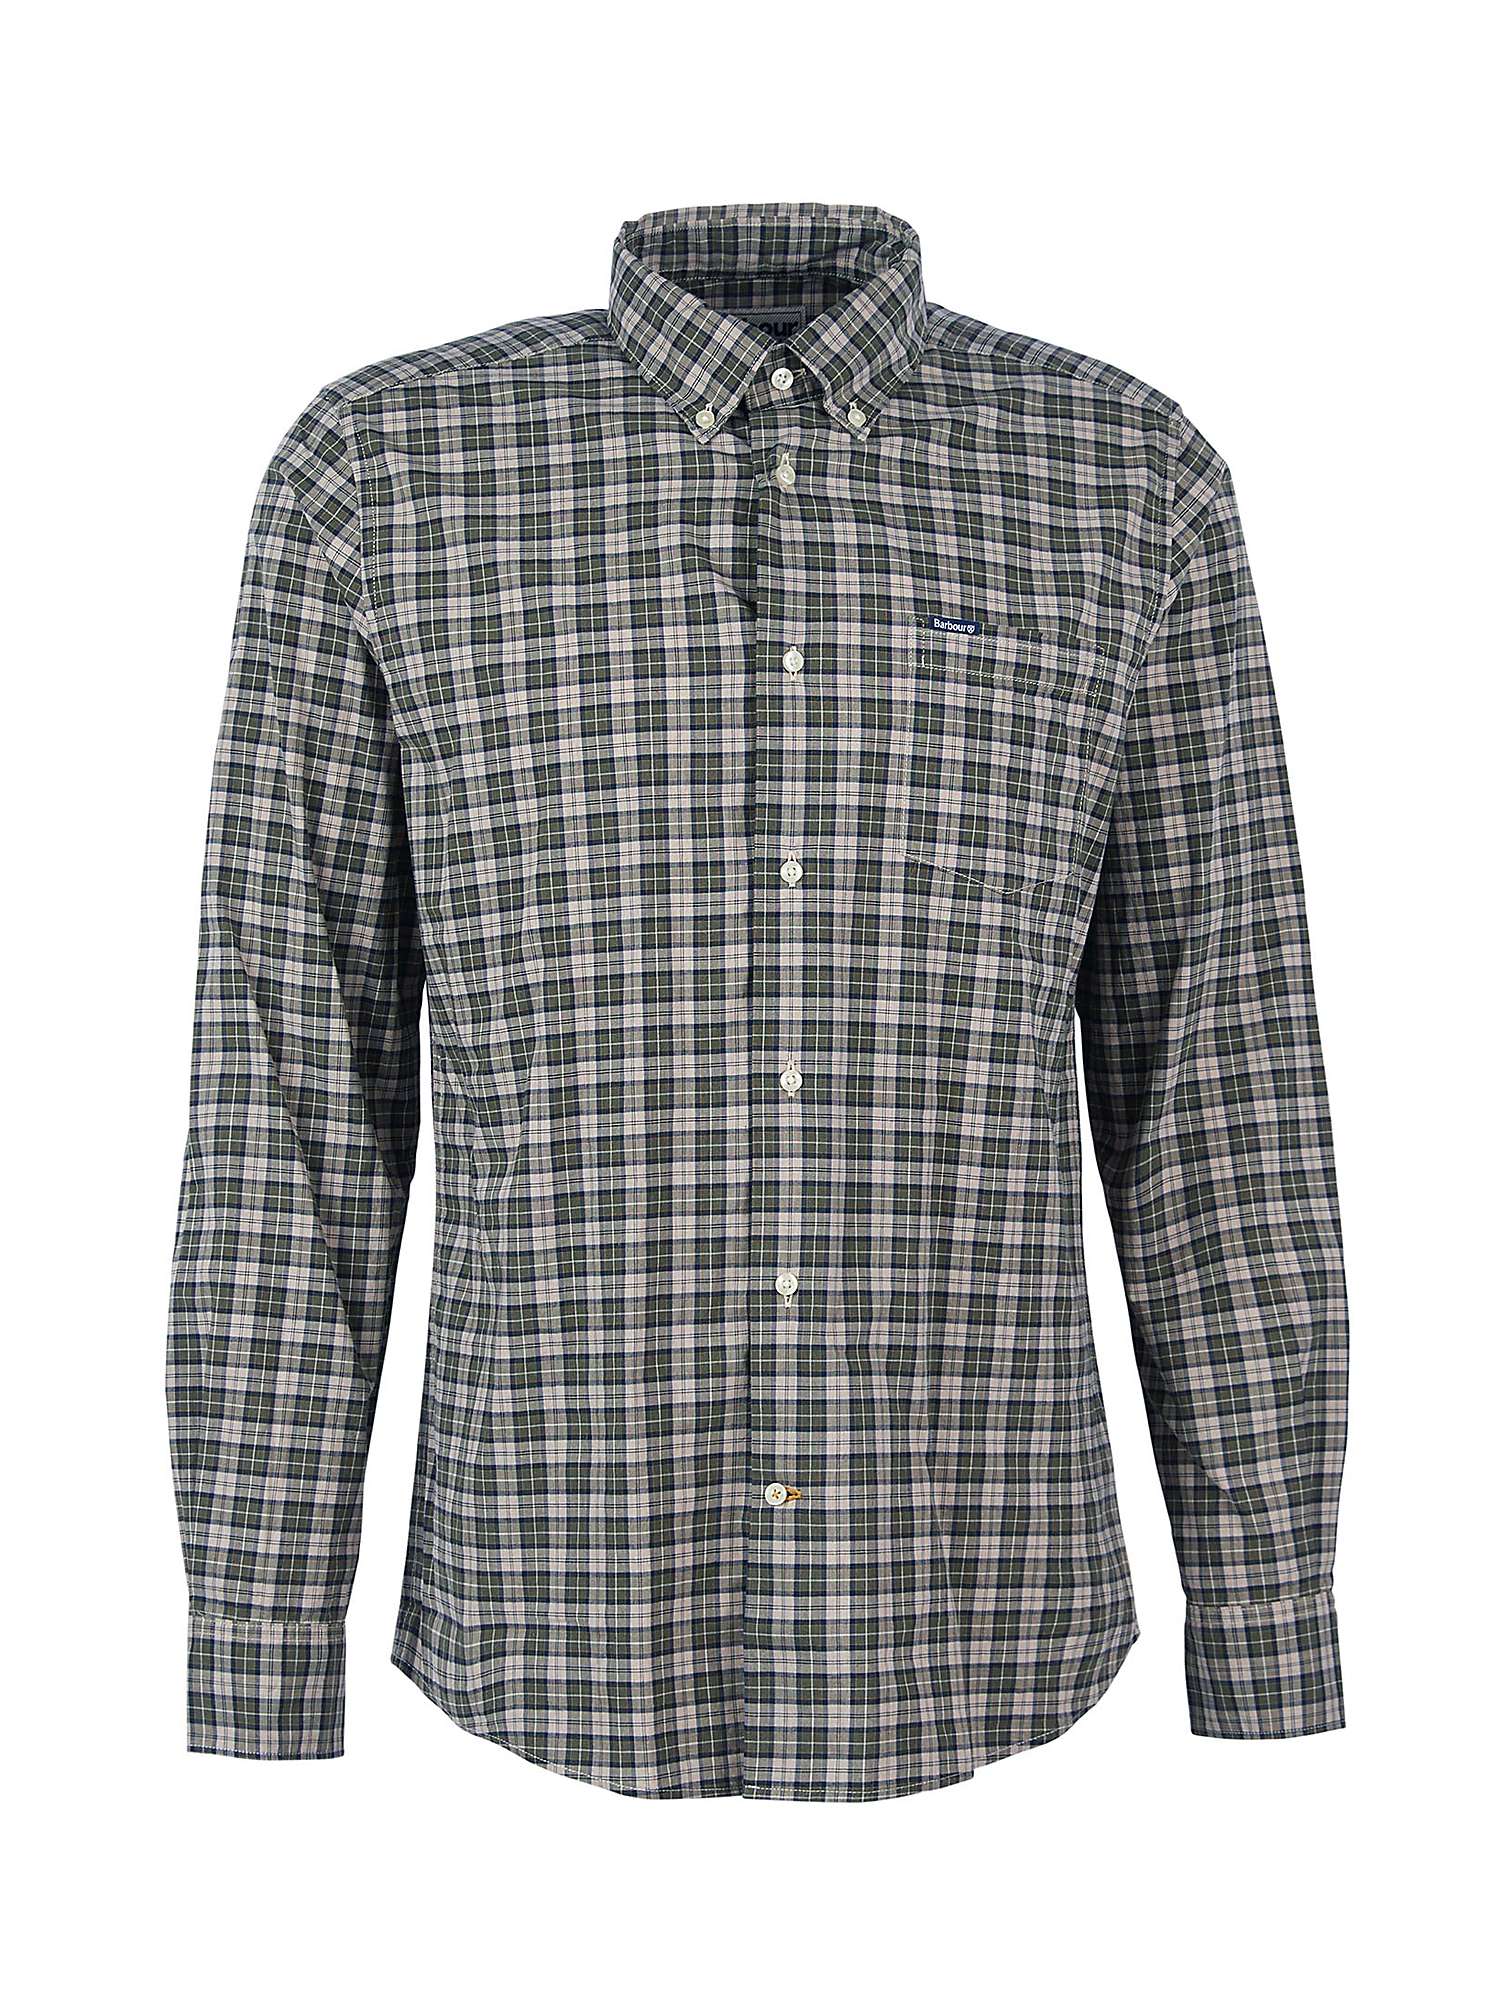 Barbour Lomond Tailored Shirt, Forest Mist at John Lewis & Partners